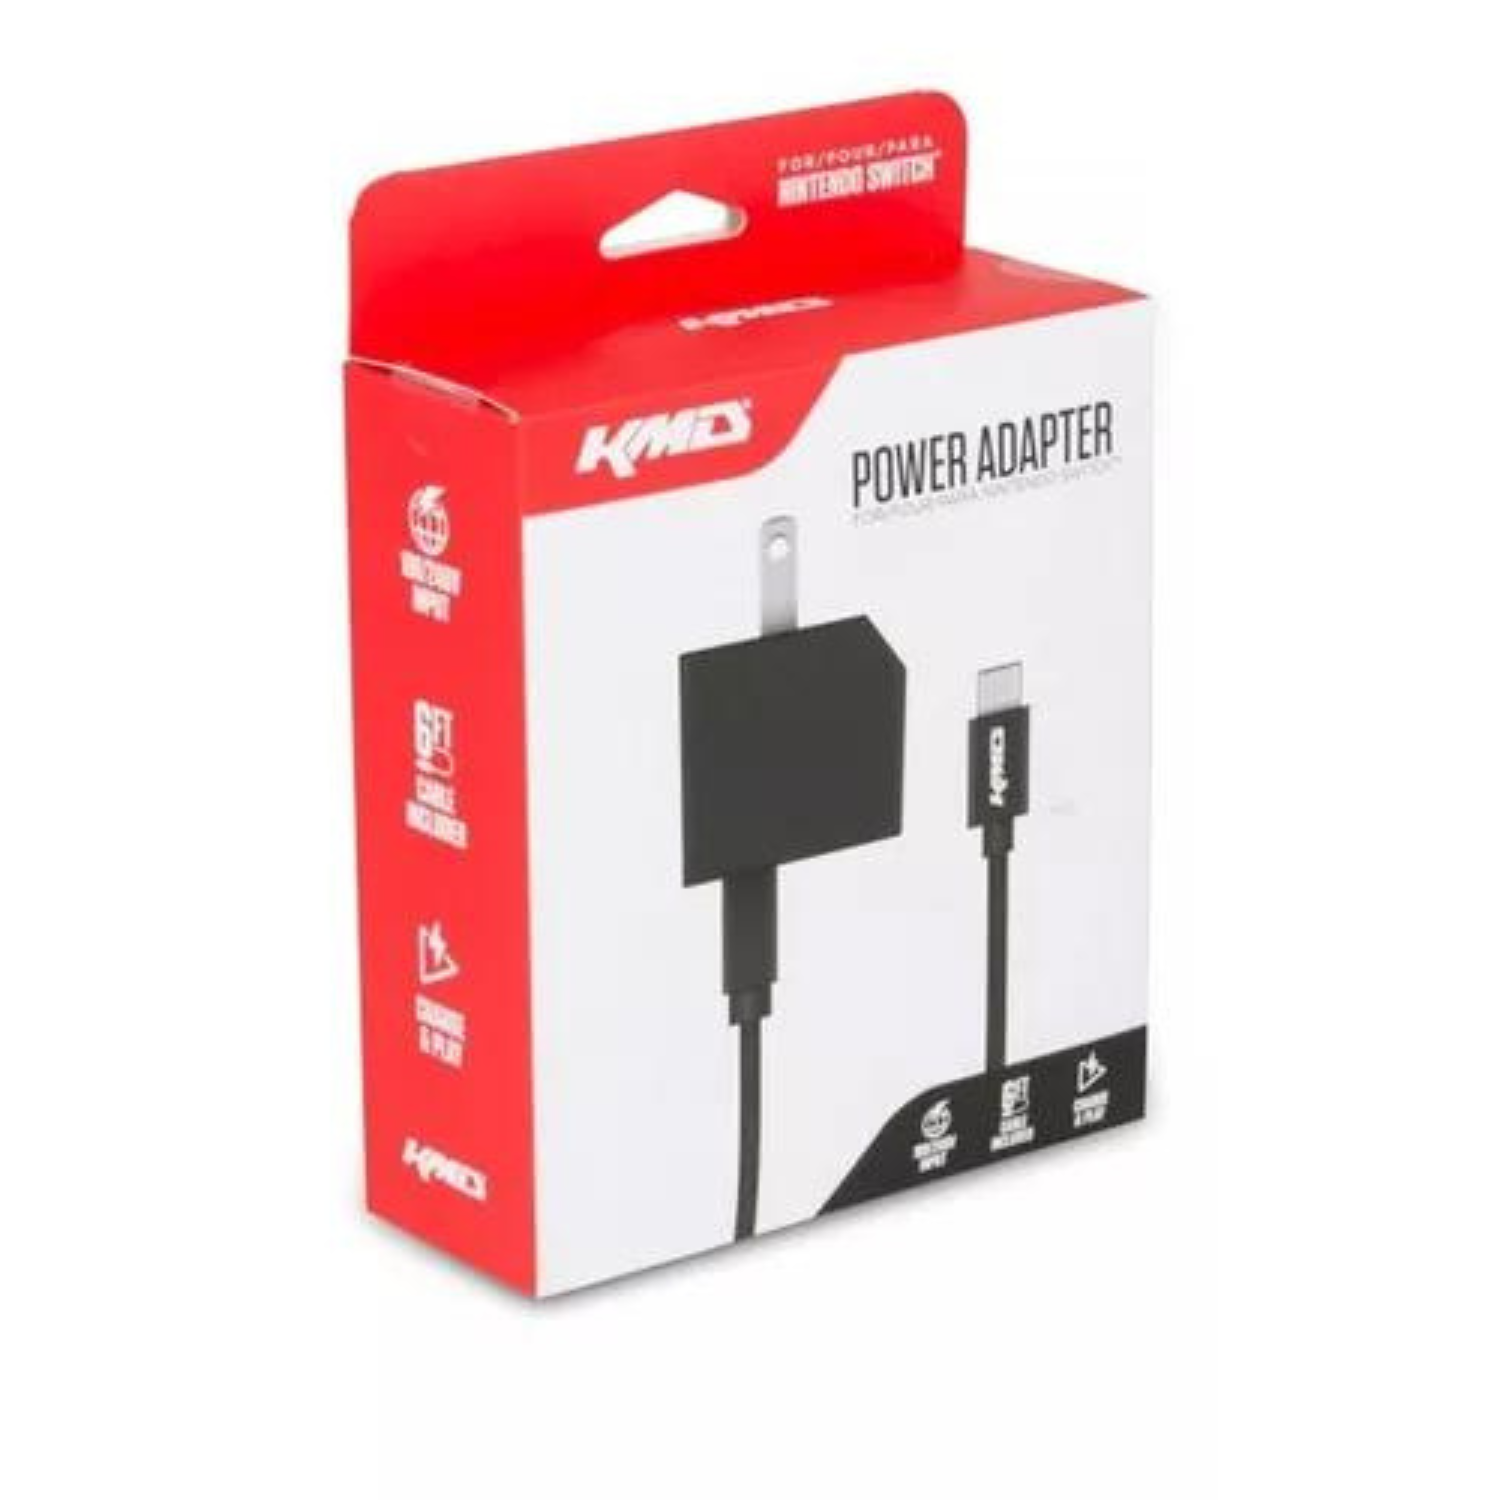 Ac Power Adapter (Kmd) Nintendo Switch